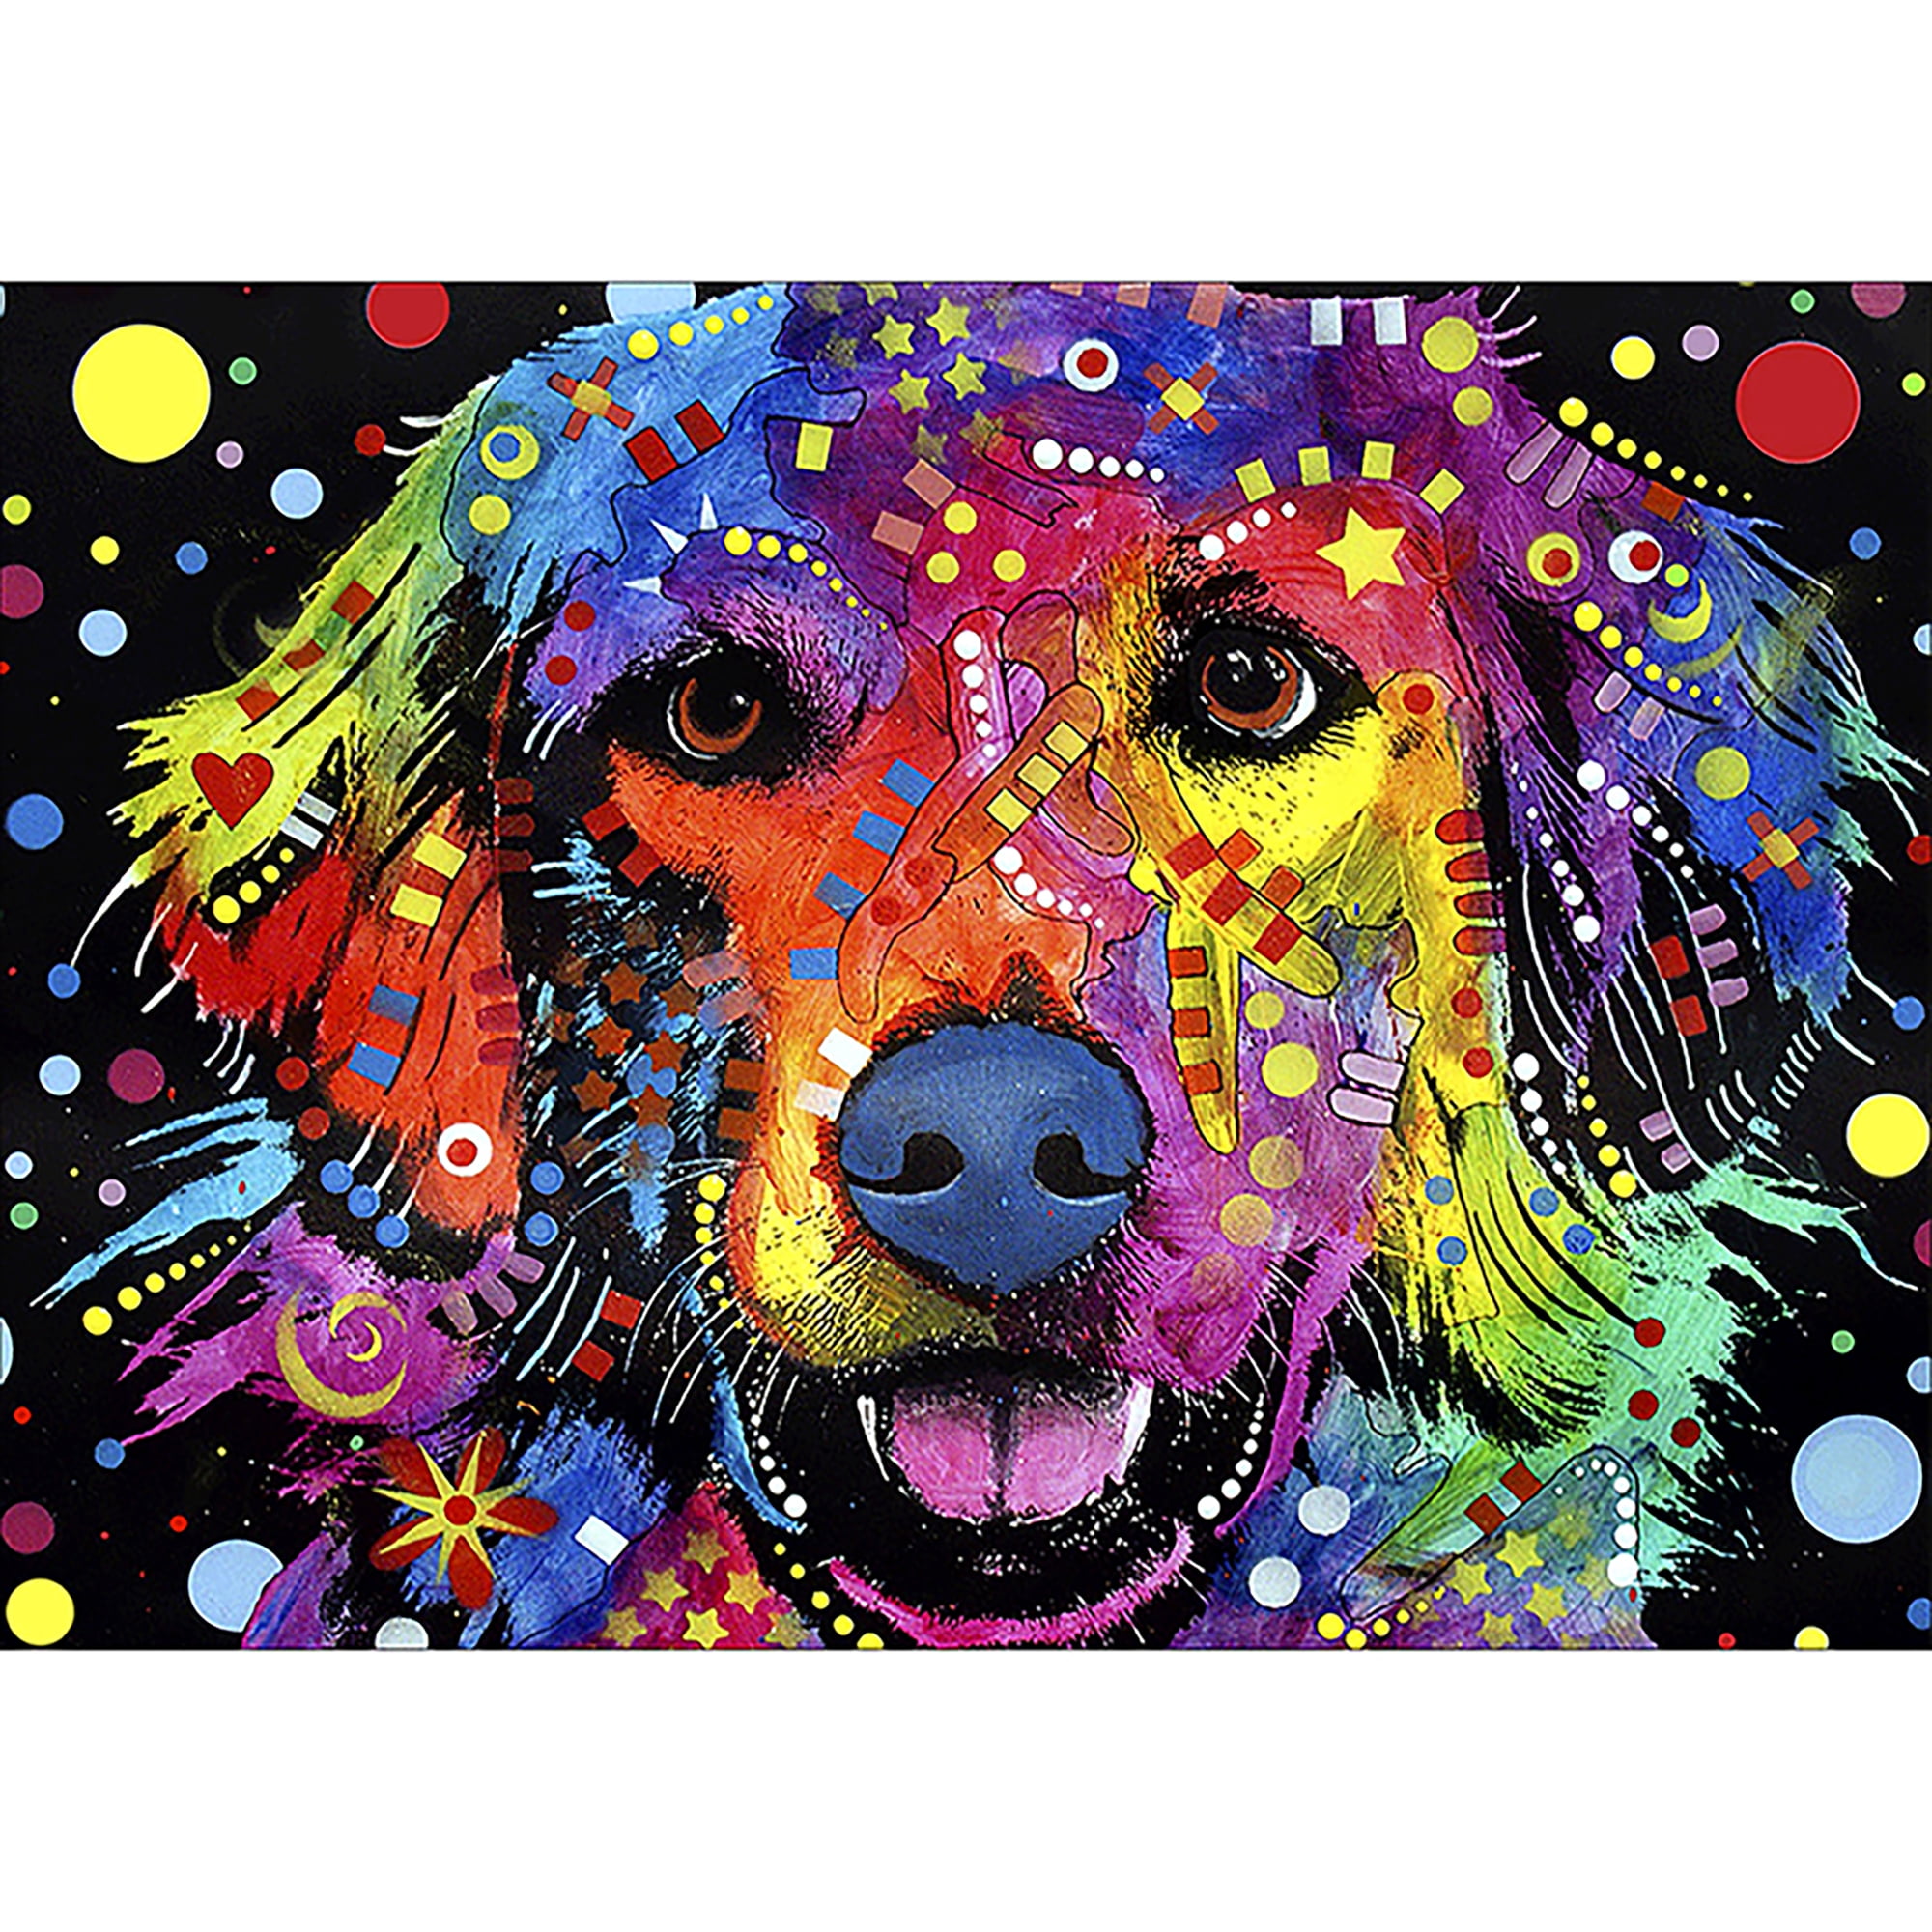 DIY Diamond Painting Cross Stitch Kit Colorful Dog Craft Art Home Wall Decor 5D